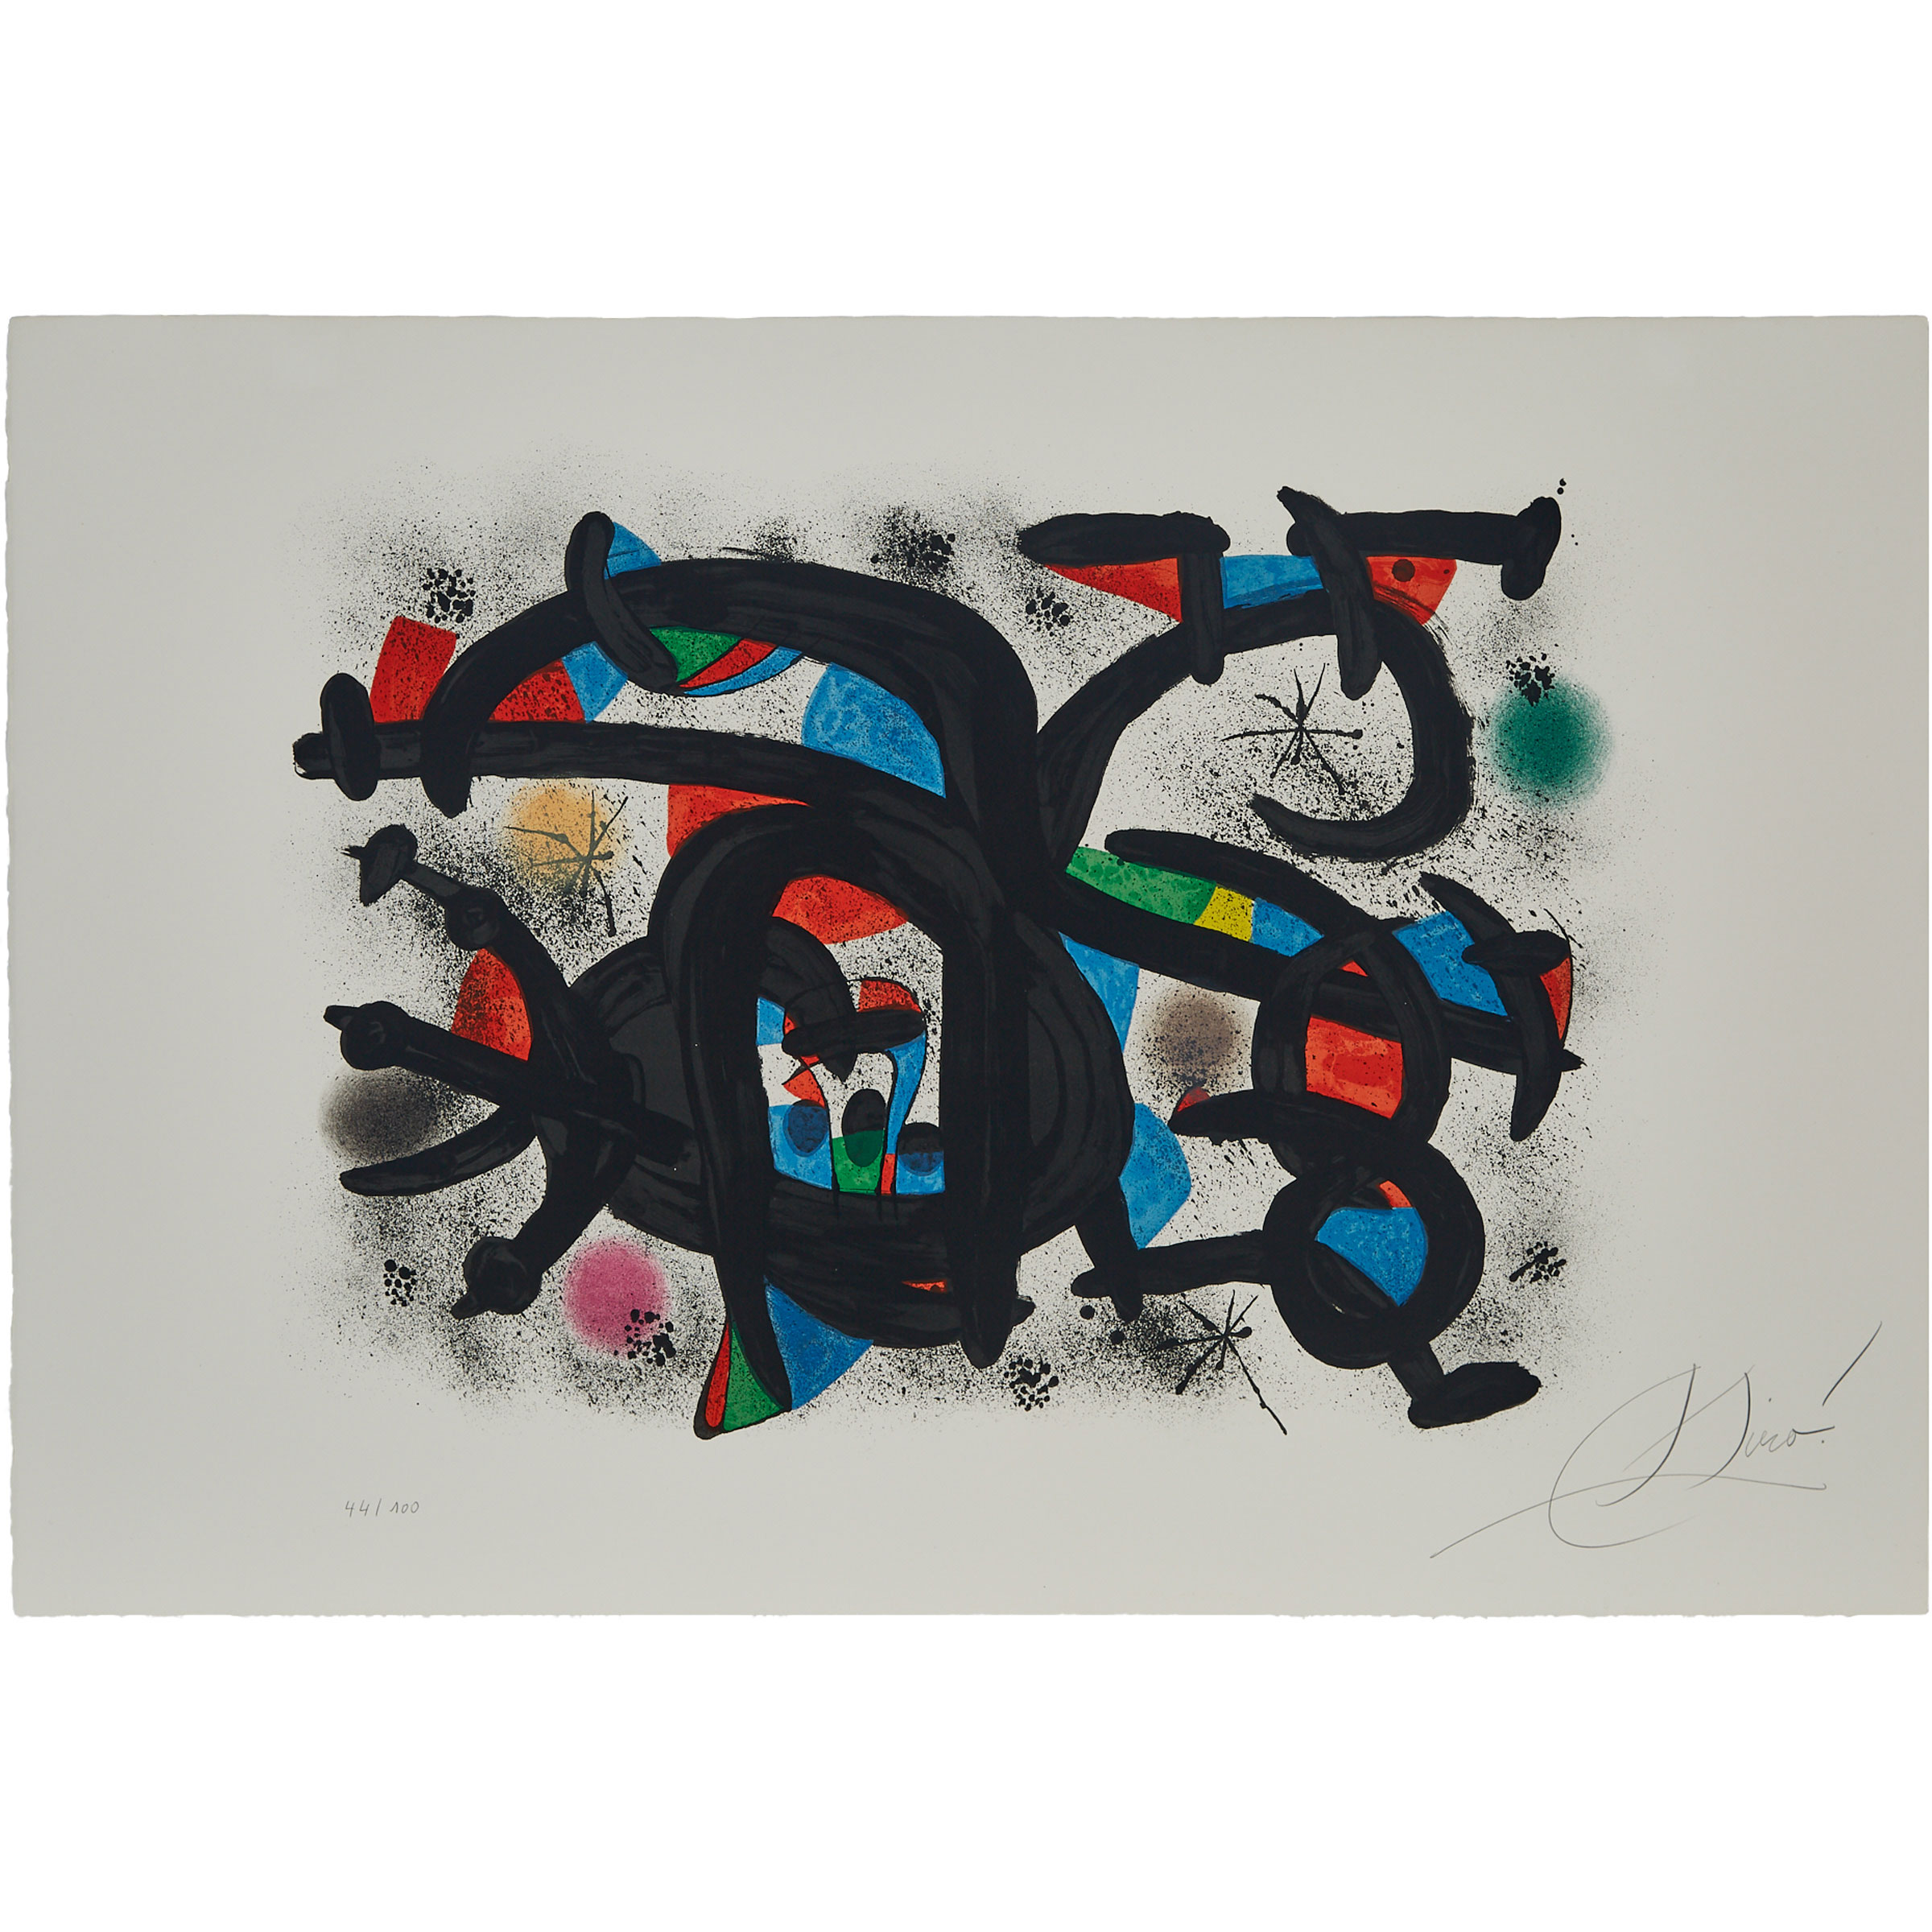 Joan Miró (1893 - 1983) 